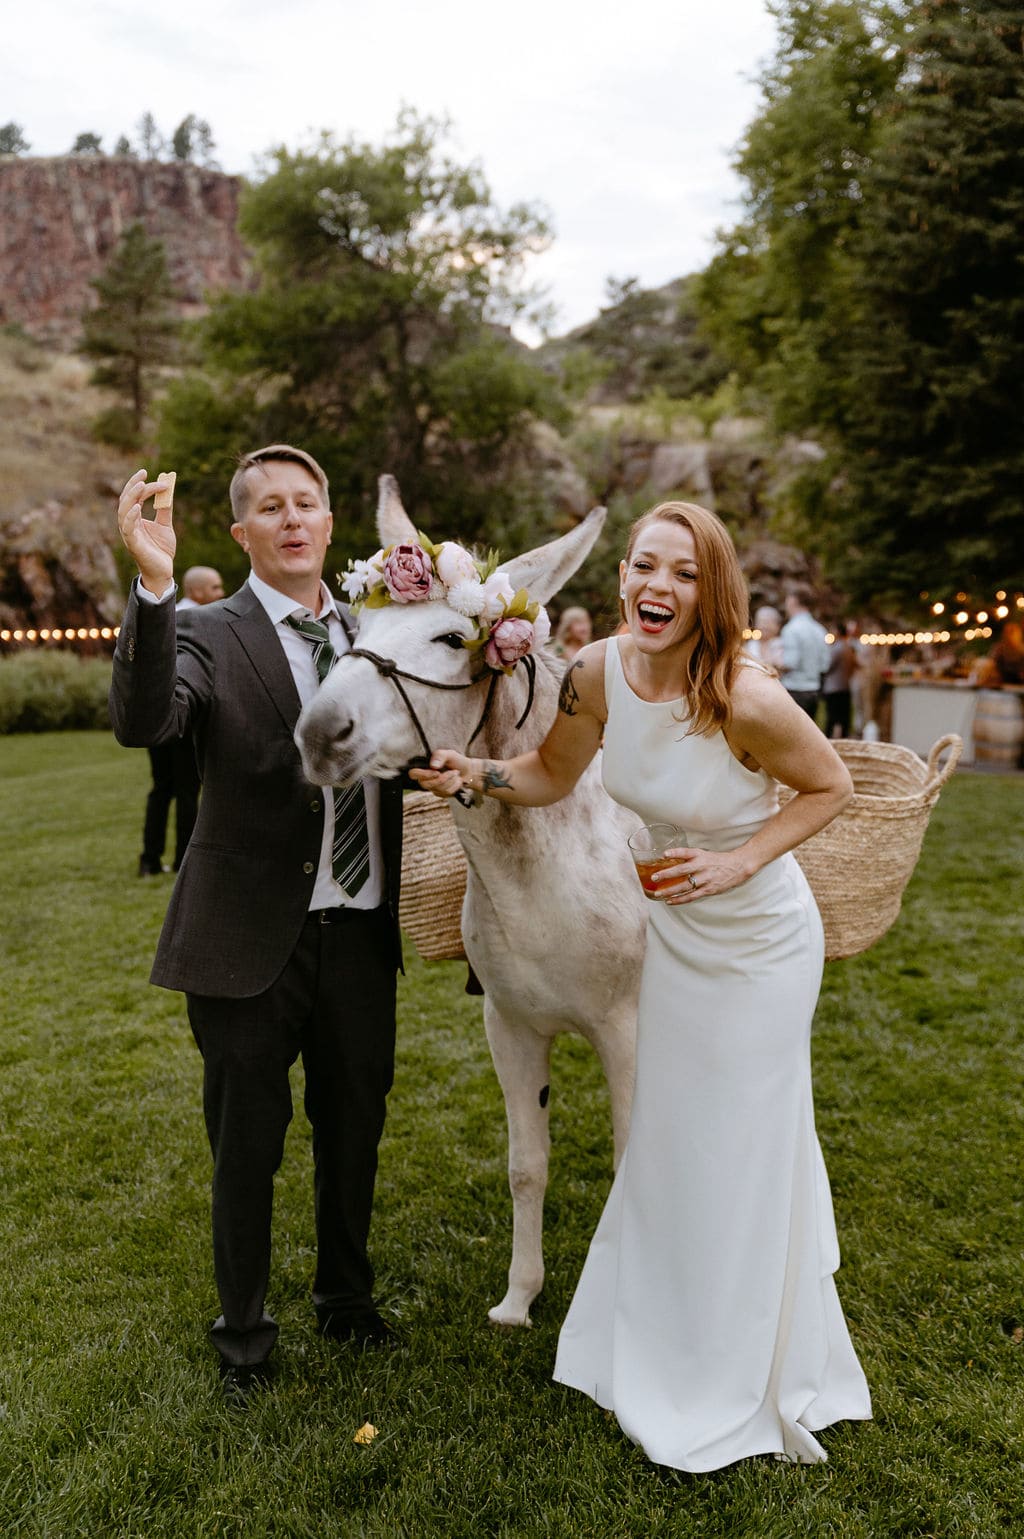 Wedding reception with the rocky mountain wedding burros